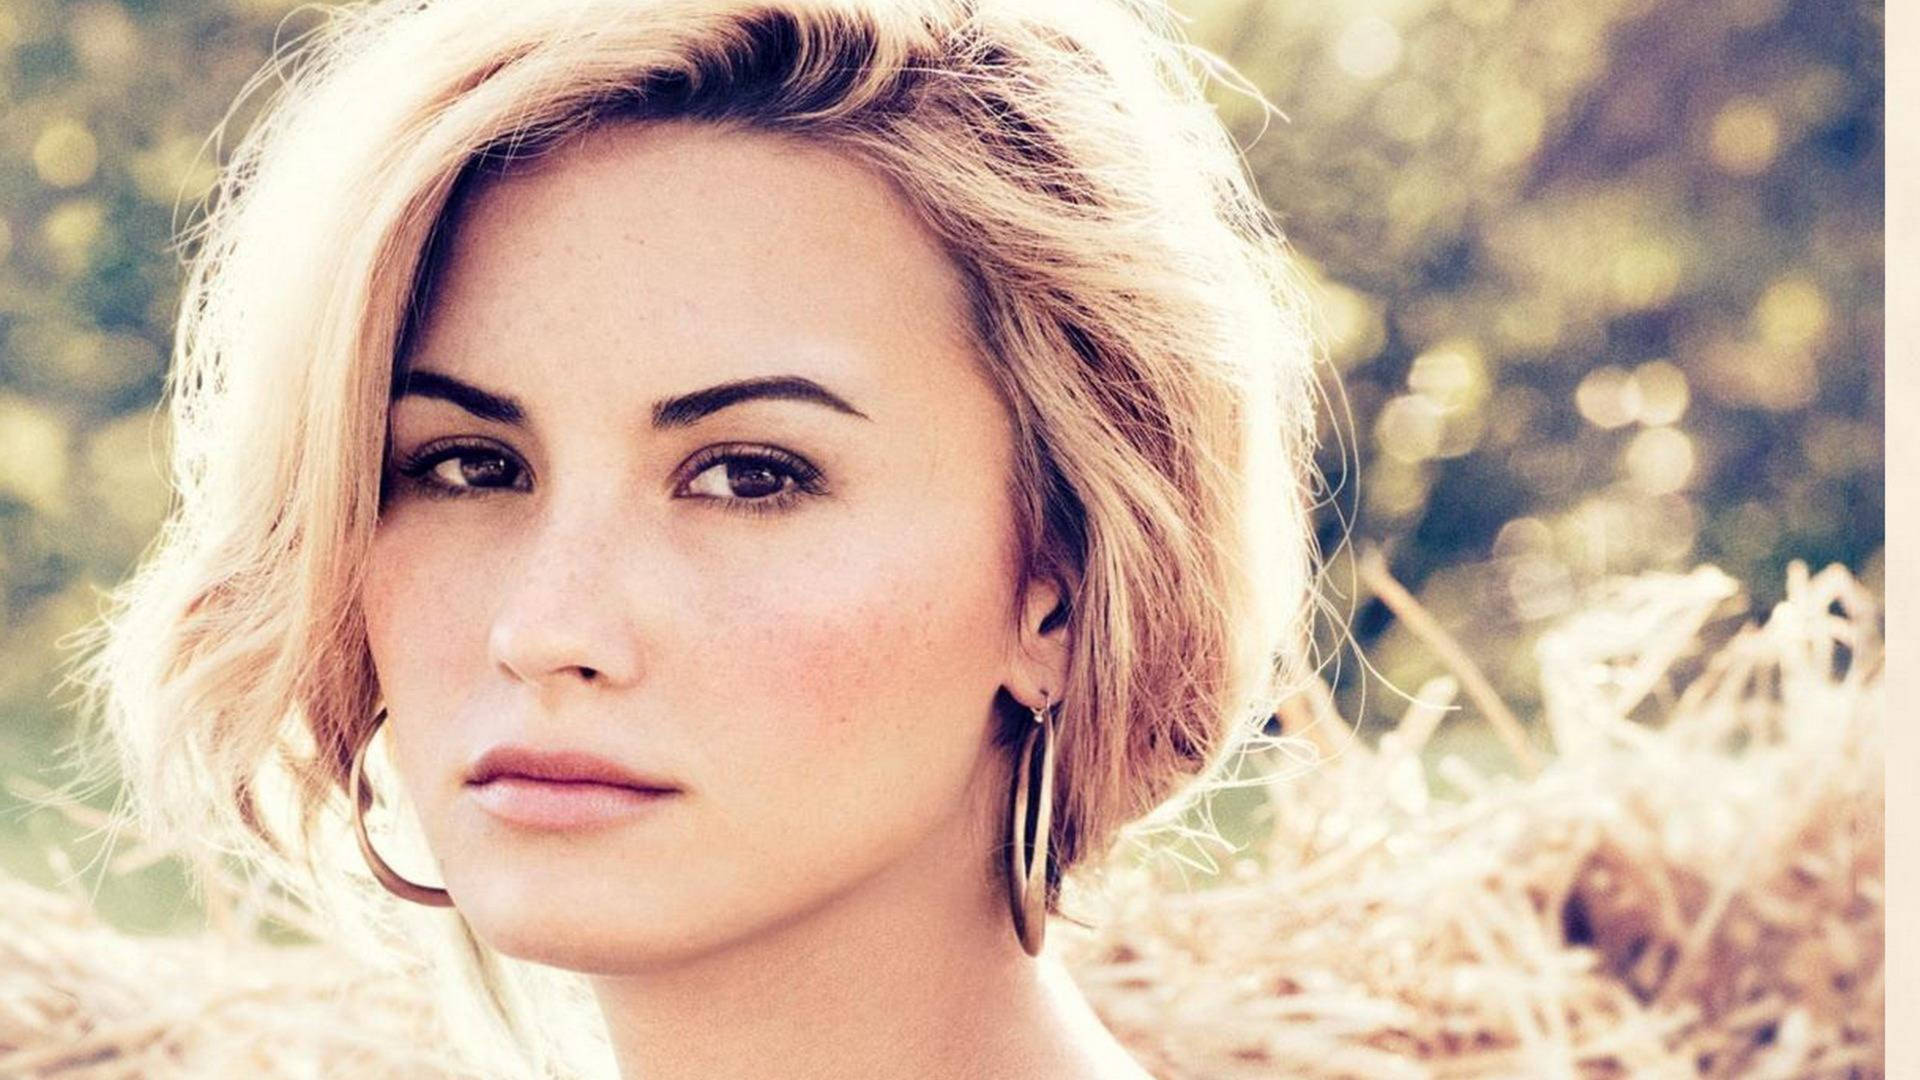 Aesthetic Photography Of Demi Lovato